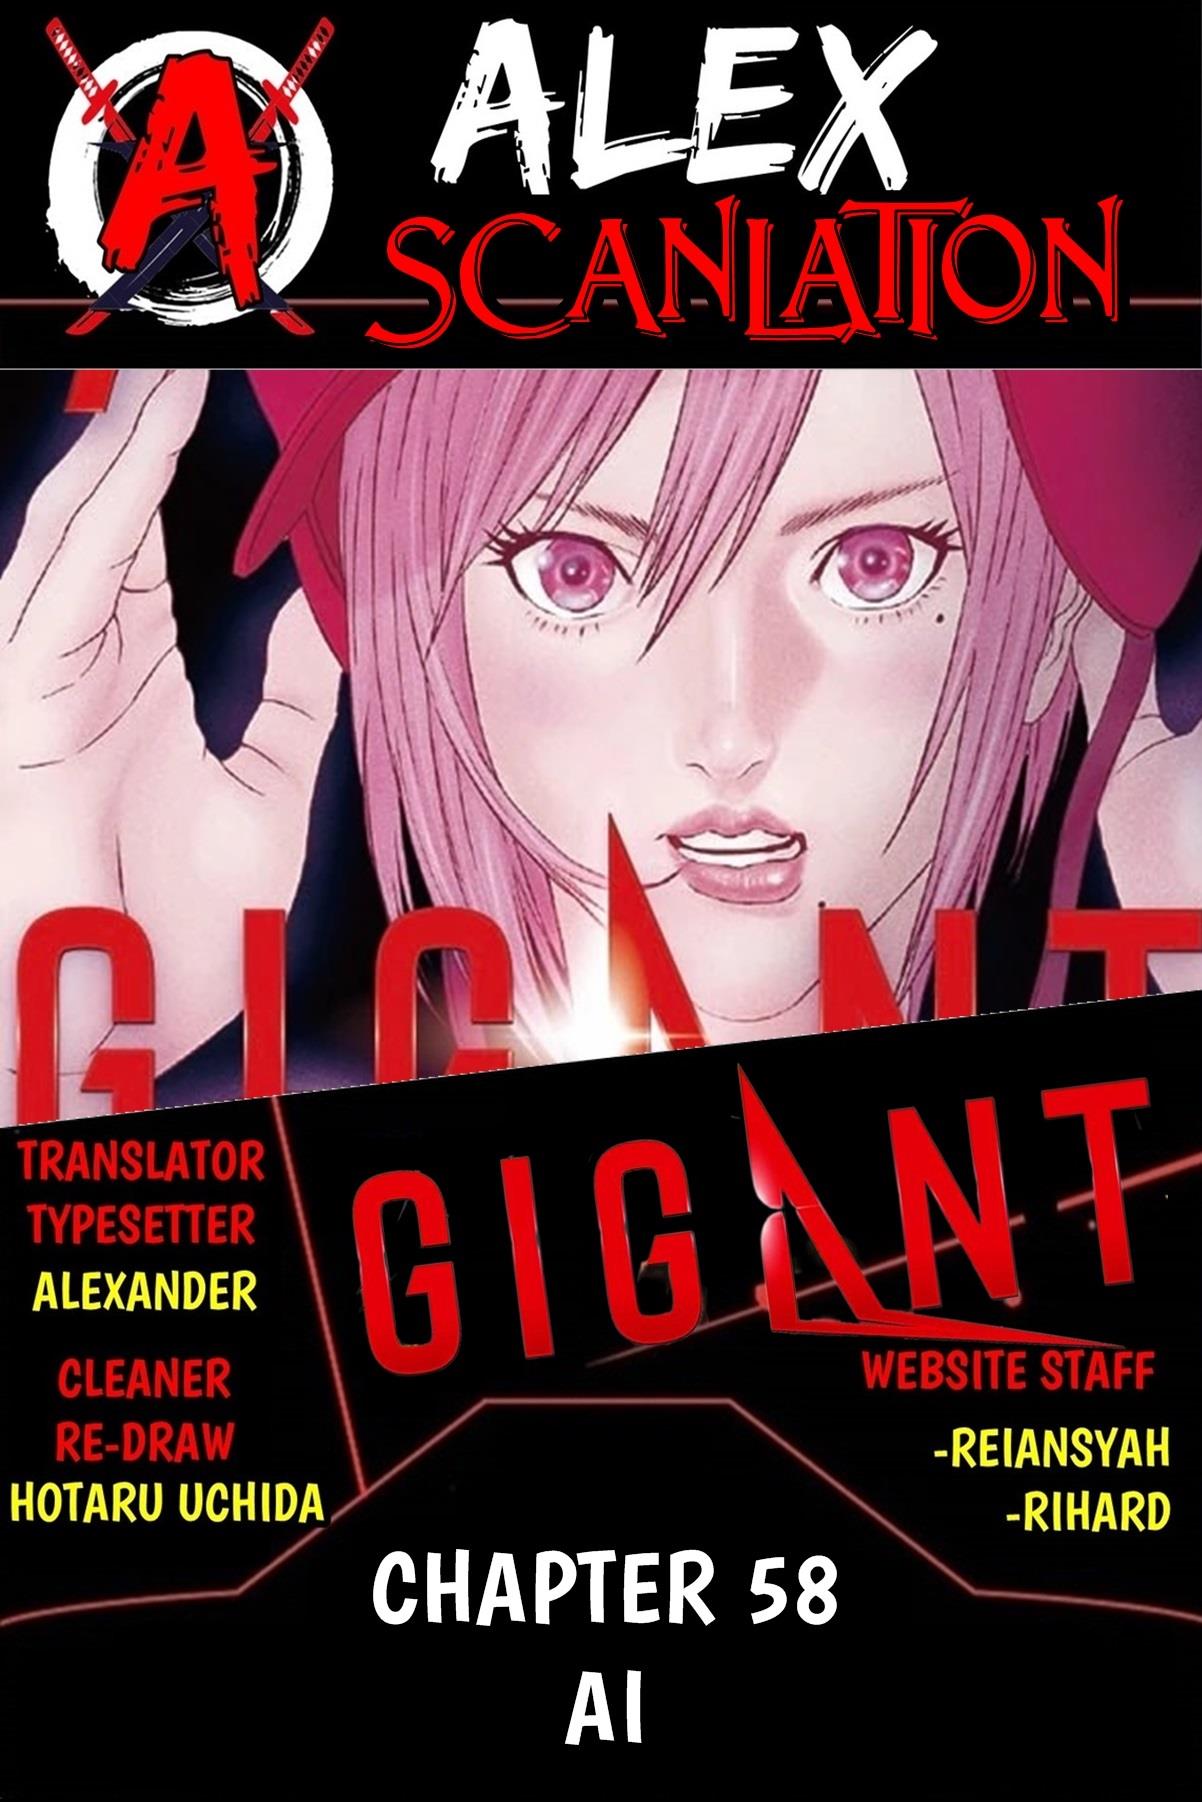 GIGANT Chapter 58